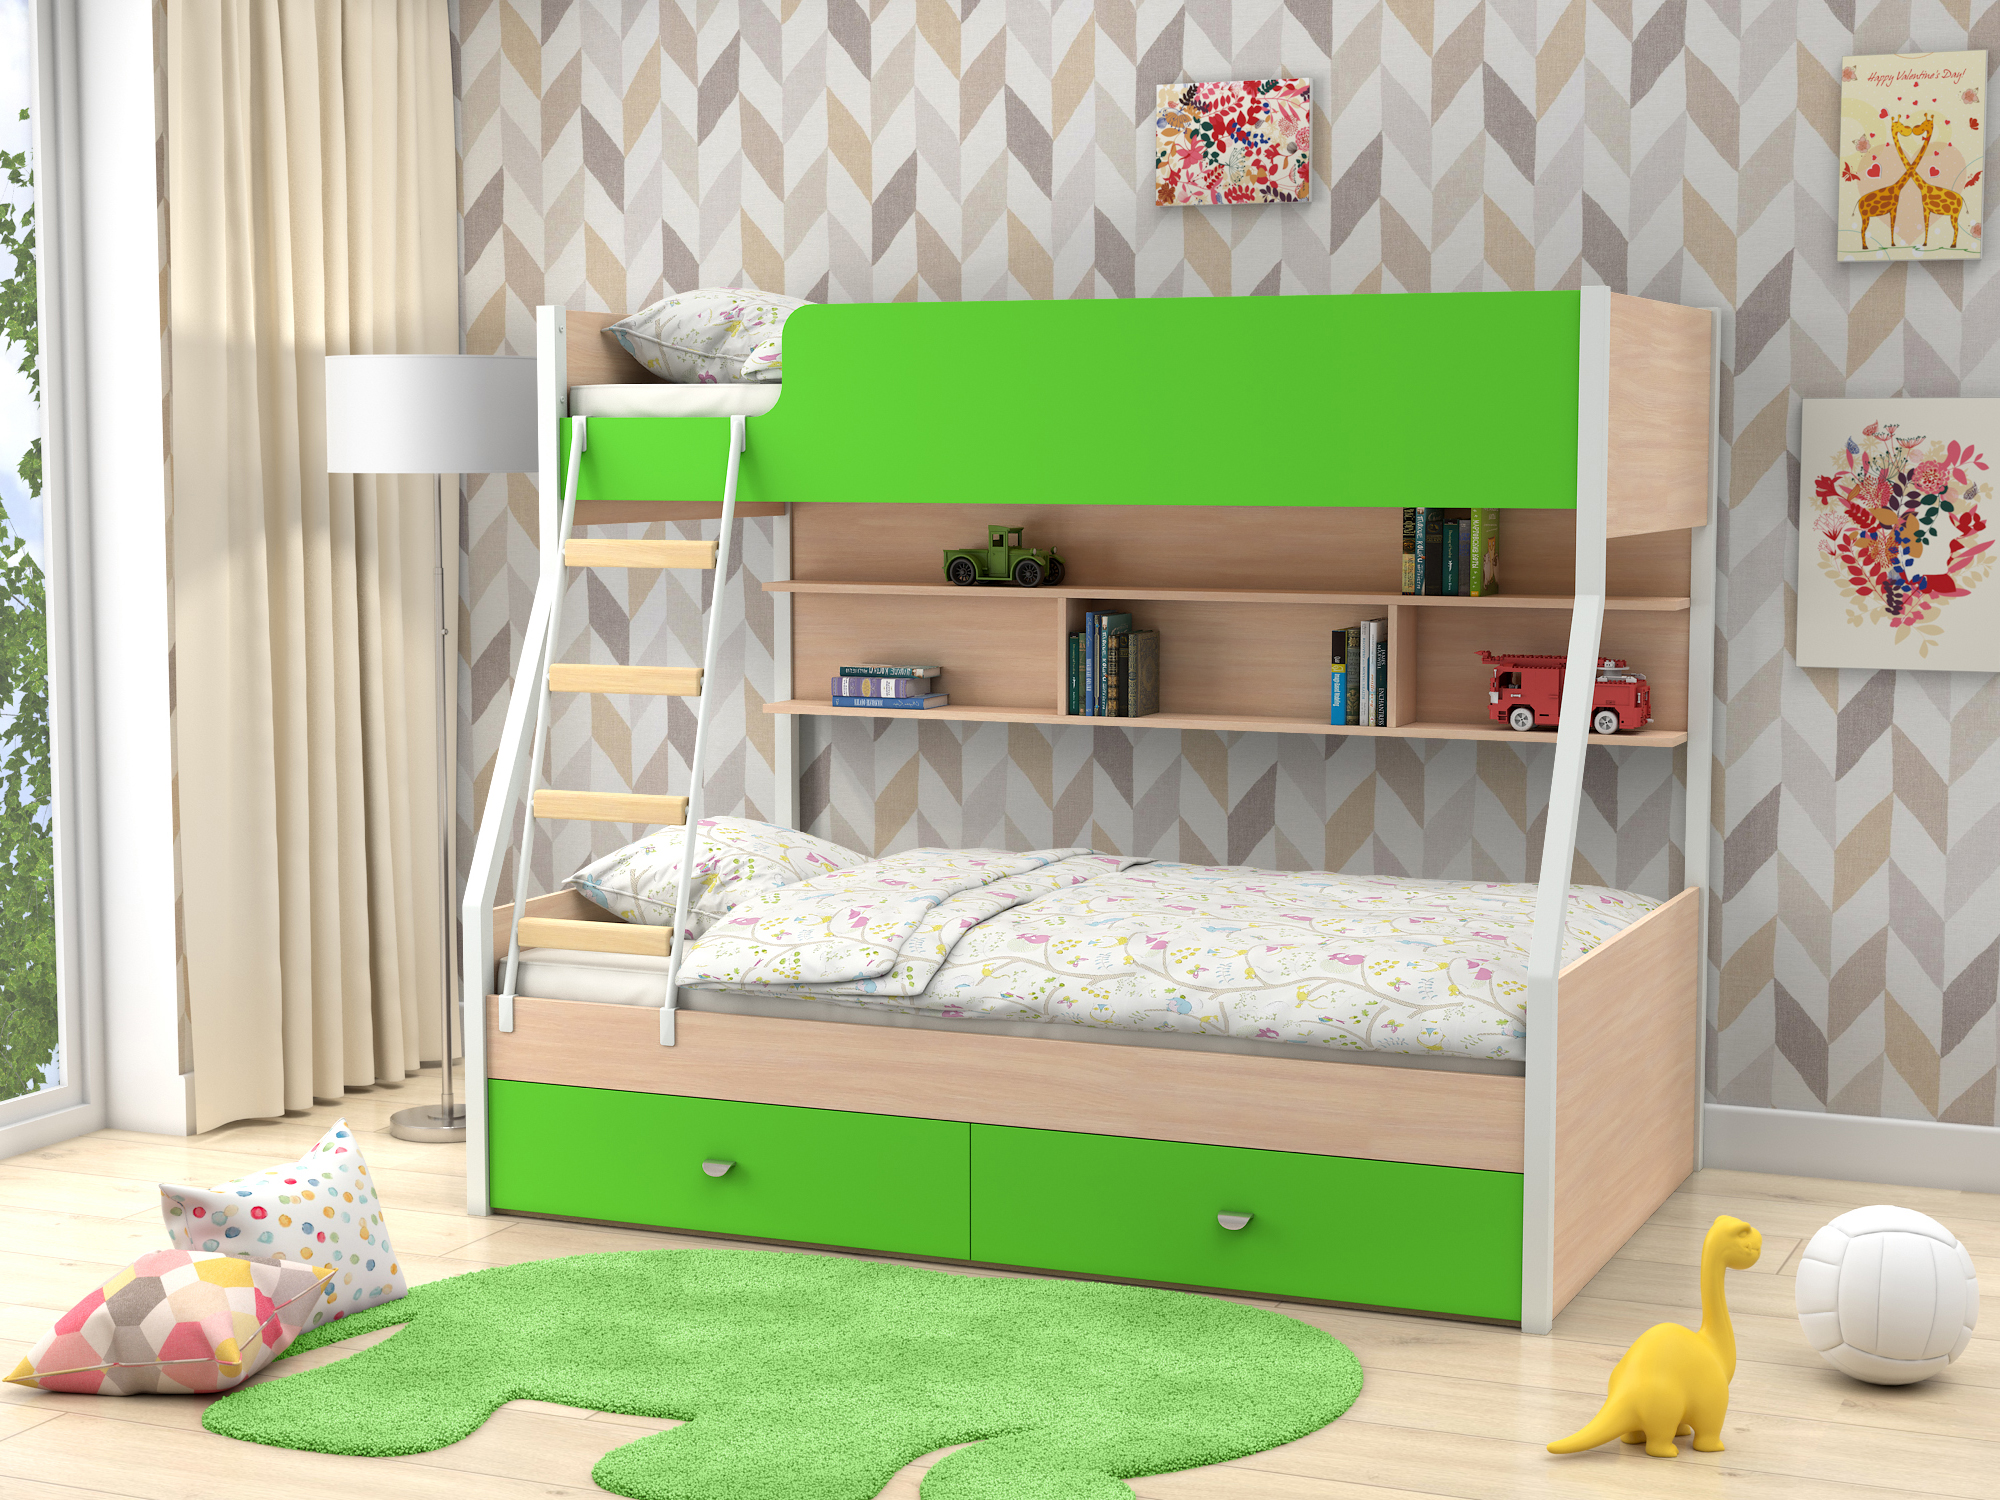 Двухъярусная кровать Golden Kids-3 (90х190/120х190) Зеленый, Белый, Бежевый, ЛДСП двухъярусная кровать golden kids 3 90х190 120х190 зеленый бежевый лдсп